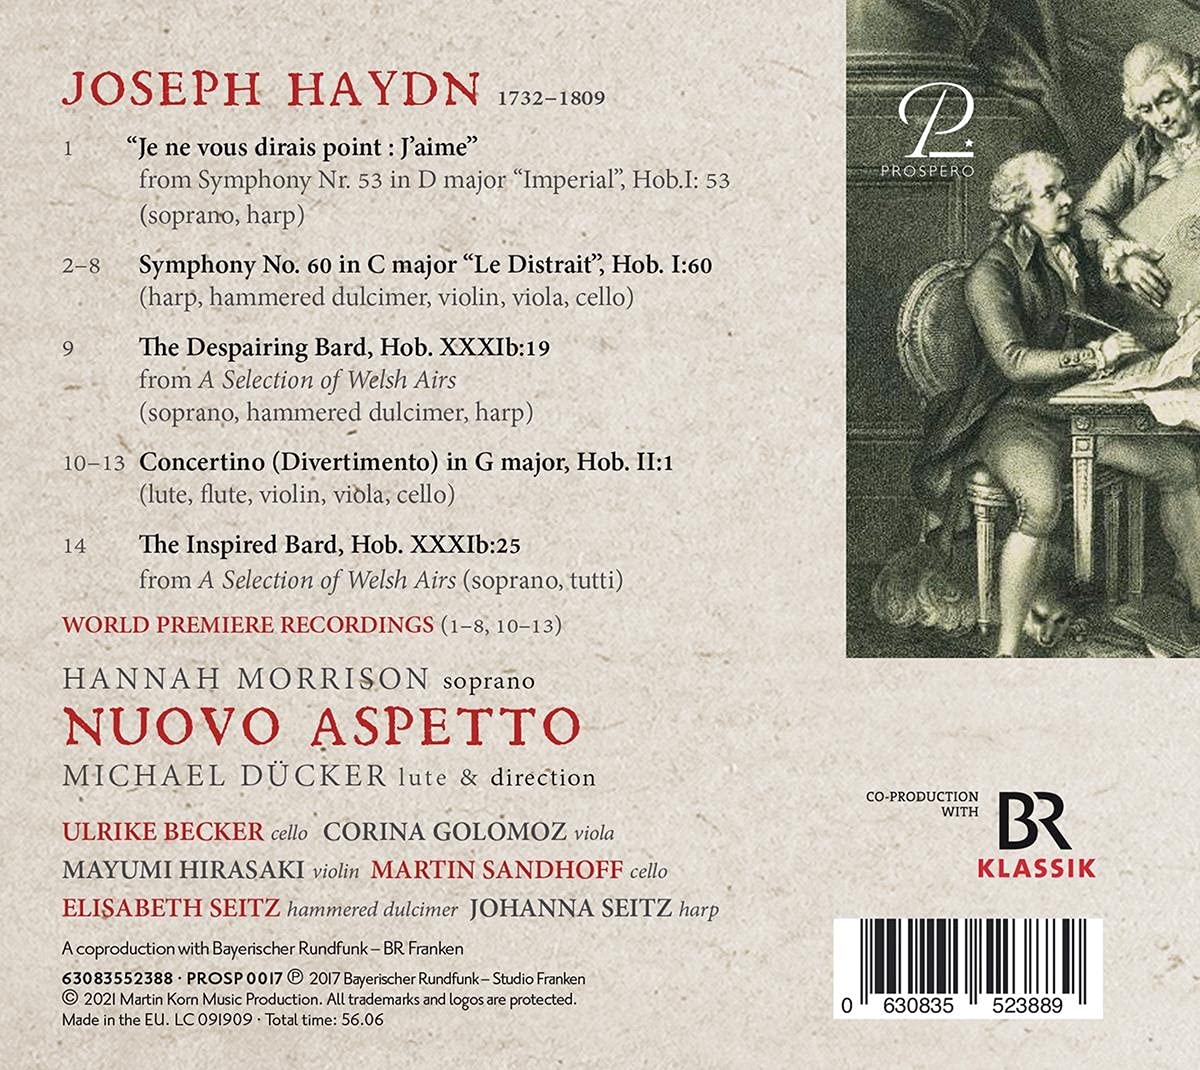 Hannah Morrison / Nuovo Aspetto 하이든: 당대 작곡가에 의한 편곡들 (Haydn: Chamber music arrangements by his contemporaries) 